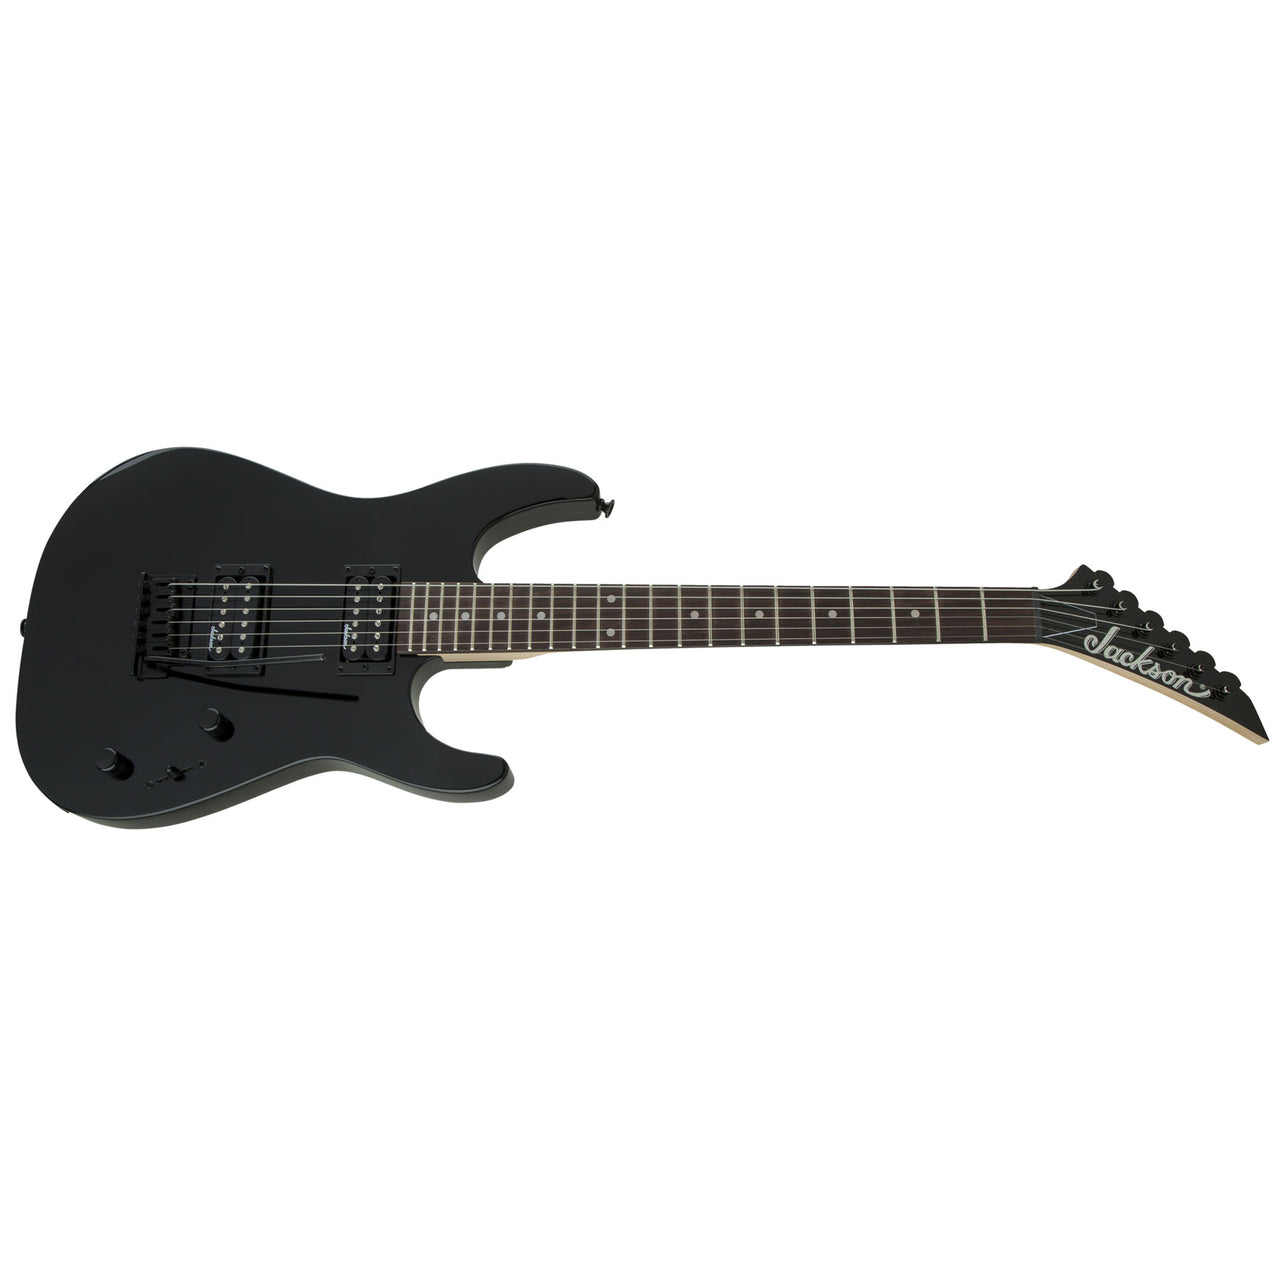 Guitarra Eléctrica Jackson Js11 Dk Gloss Black 2910121503